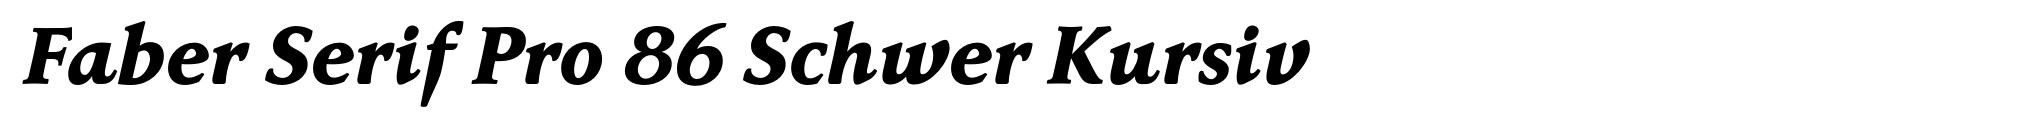 Faber Serif Pro 86 Schwer Kursiv image